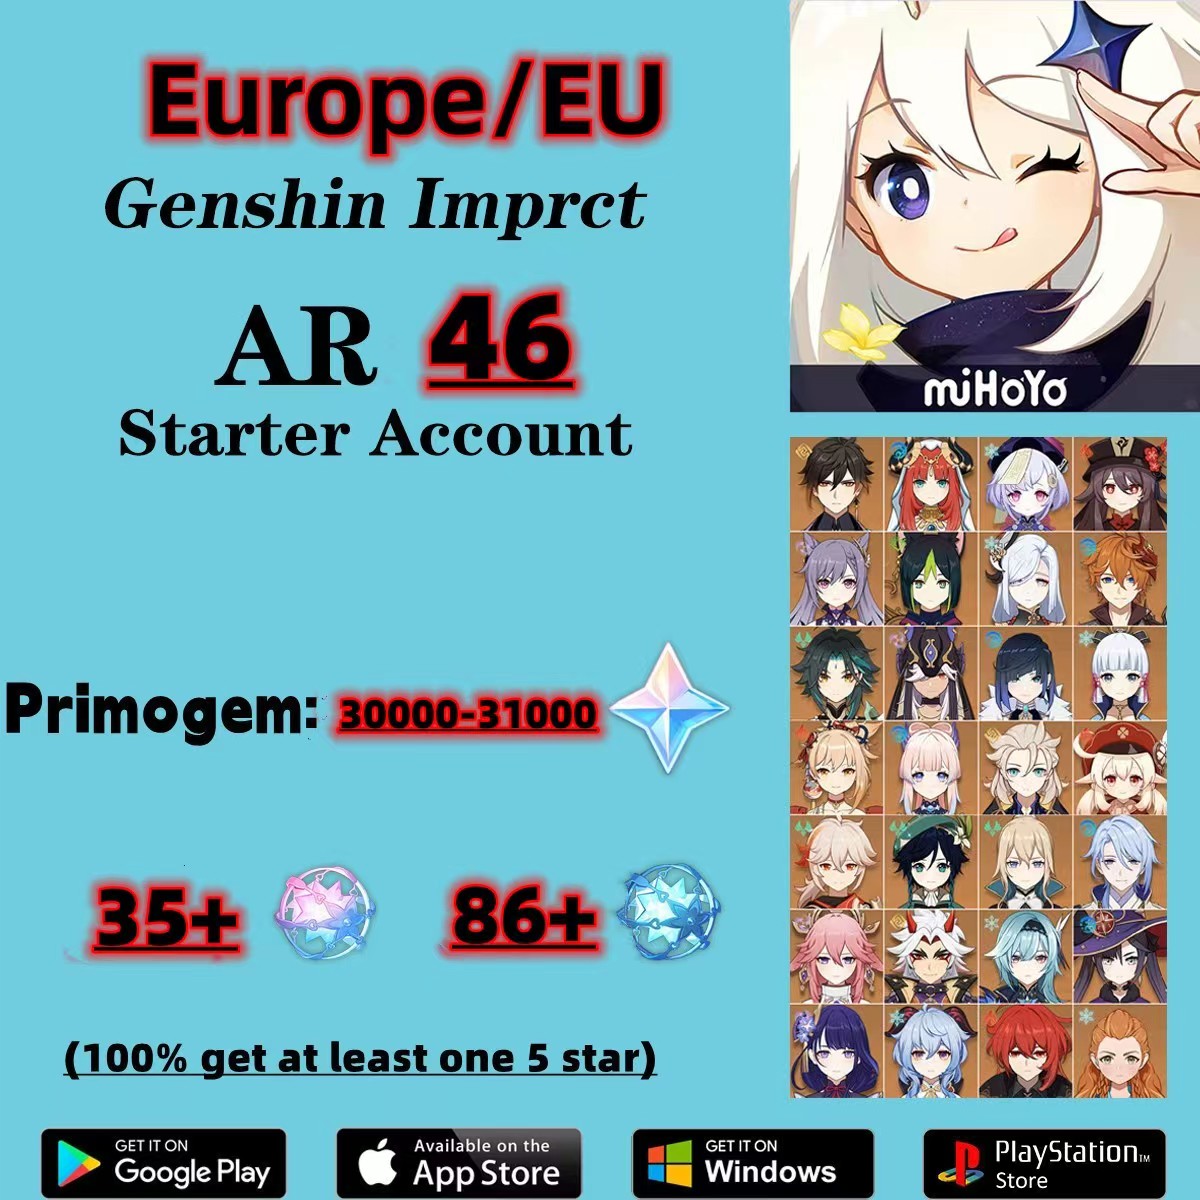 EU|AR46|Guarantee300+Wishes|Genshin Impact account|Primogem30000+|Interwined Fate 35|Acquaint Fate 86//#F58